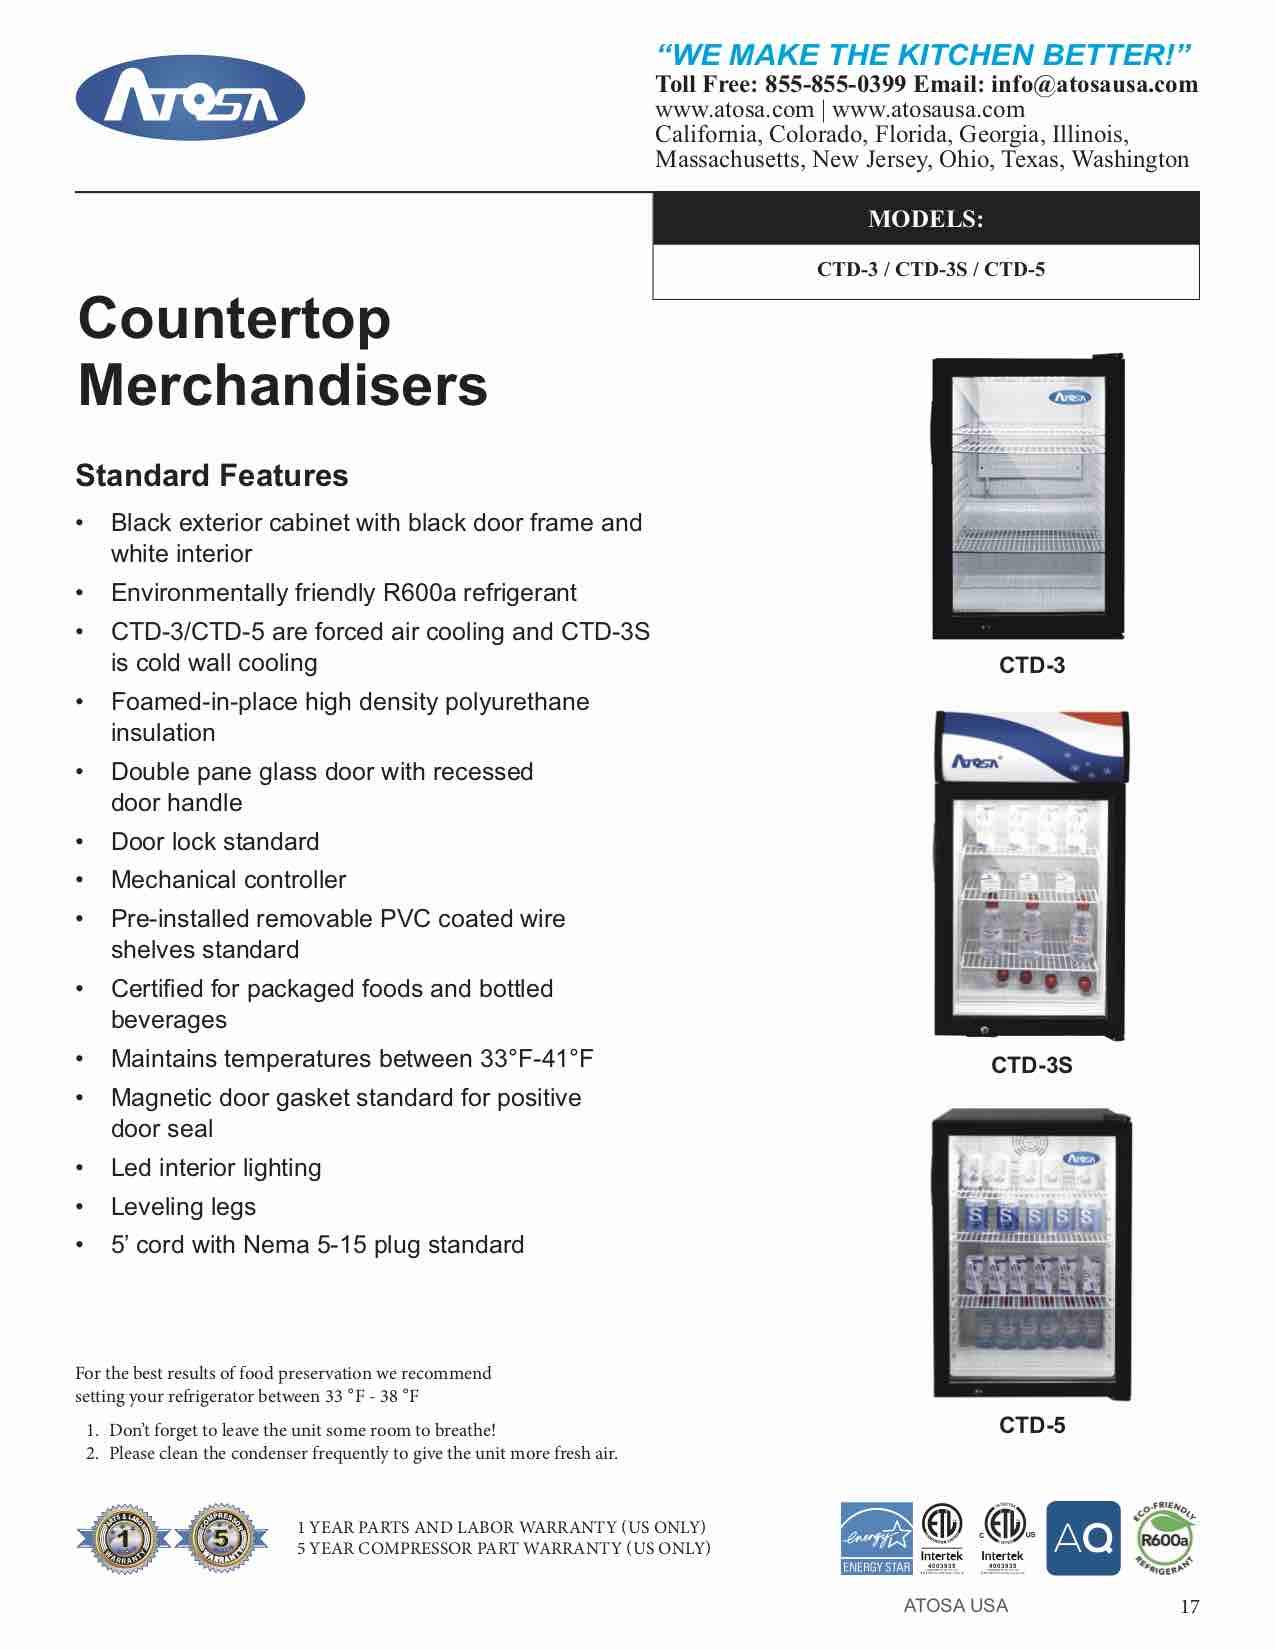 Atosa CTD-3 17 1/4" Countertop Reach-in Glass Merchandiser Display Refrigerator for Cafeteria Deli Convenient Stores | LED Lighting, 1-Swing Door, 3-Shelf, 2.4 Cu Ft Capacity | Black Coated, 115v